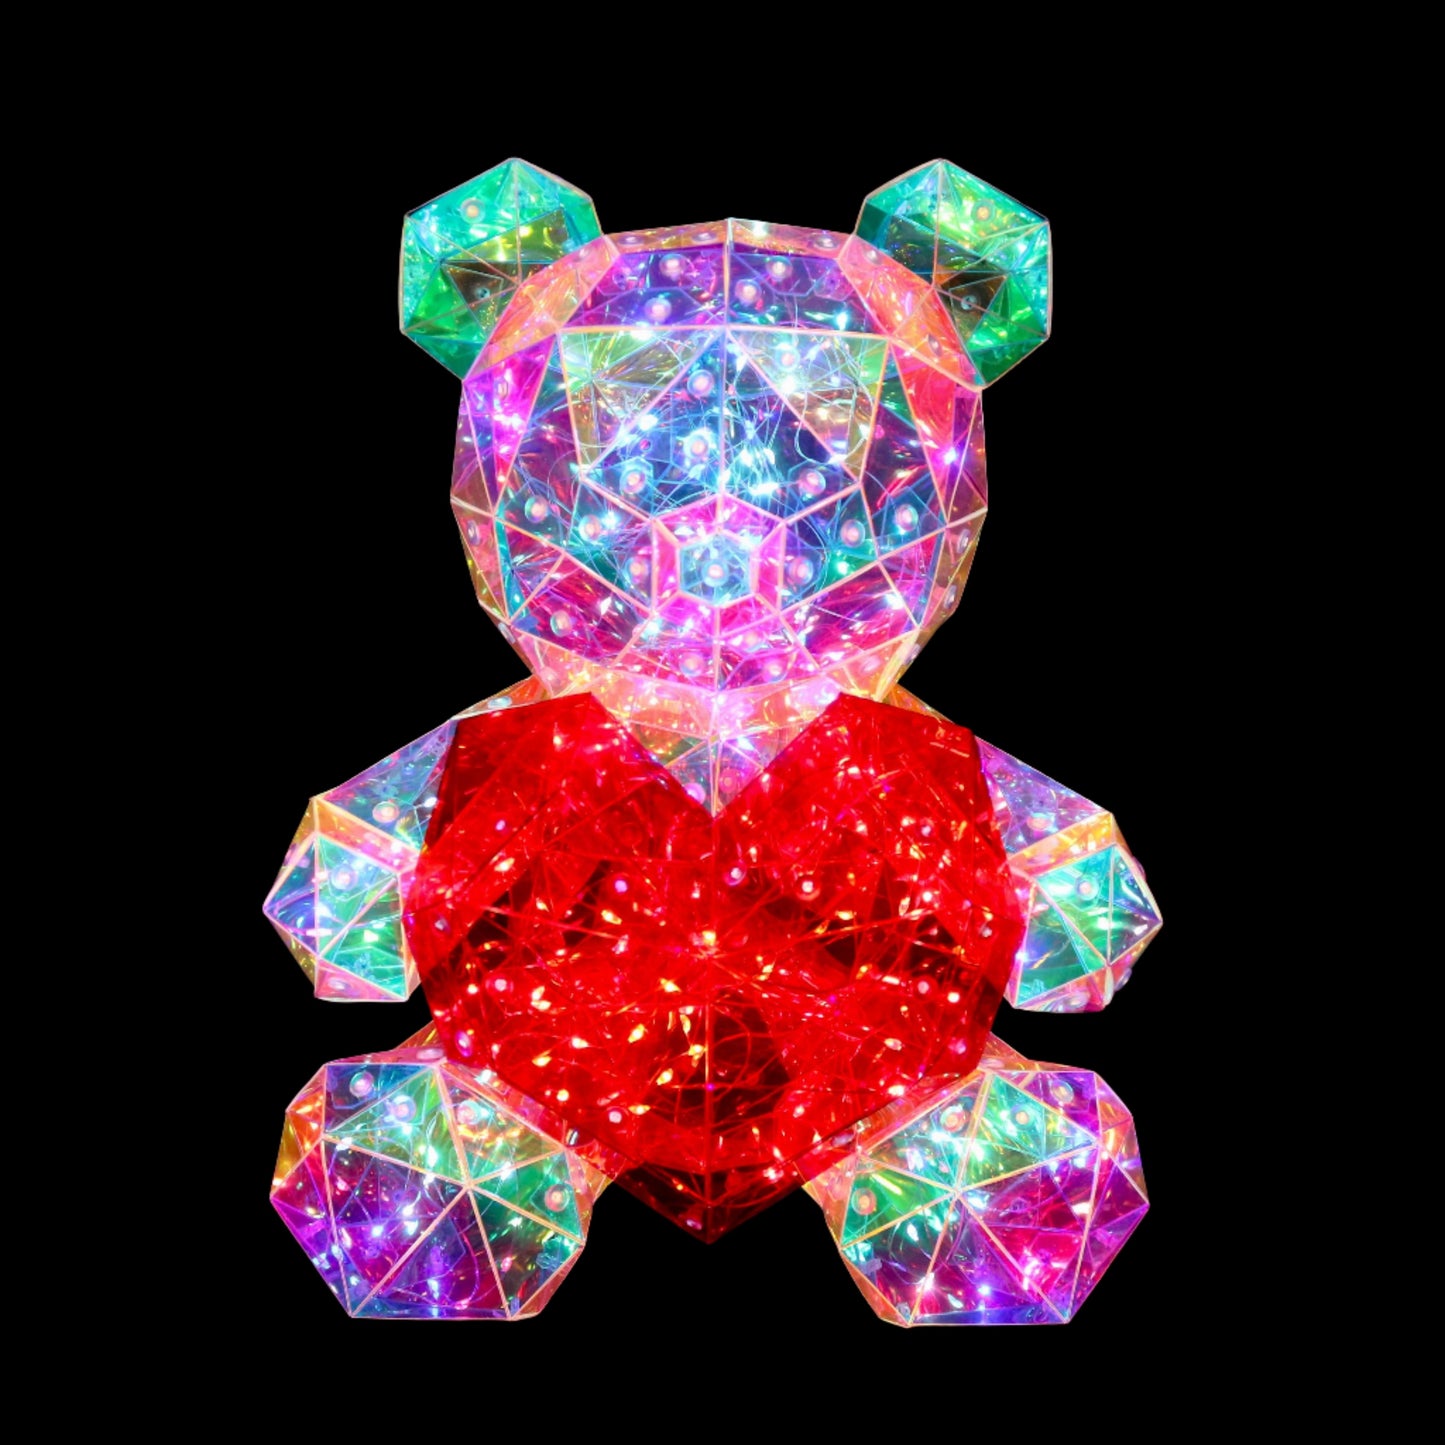 Sparkly Roses Galaxy Bear™ Medium